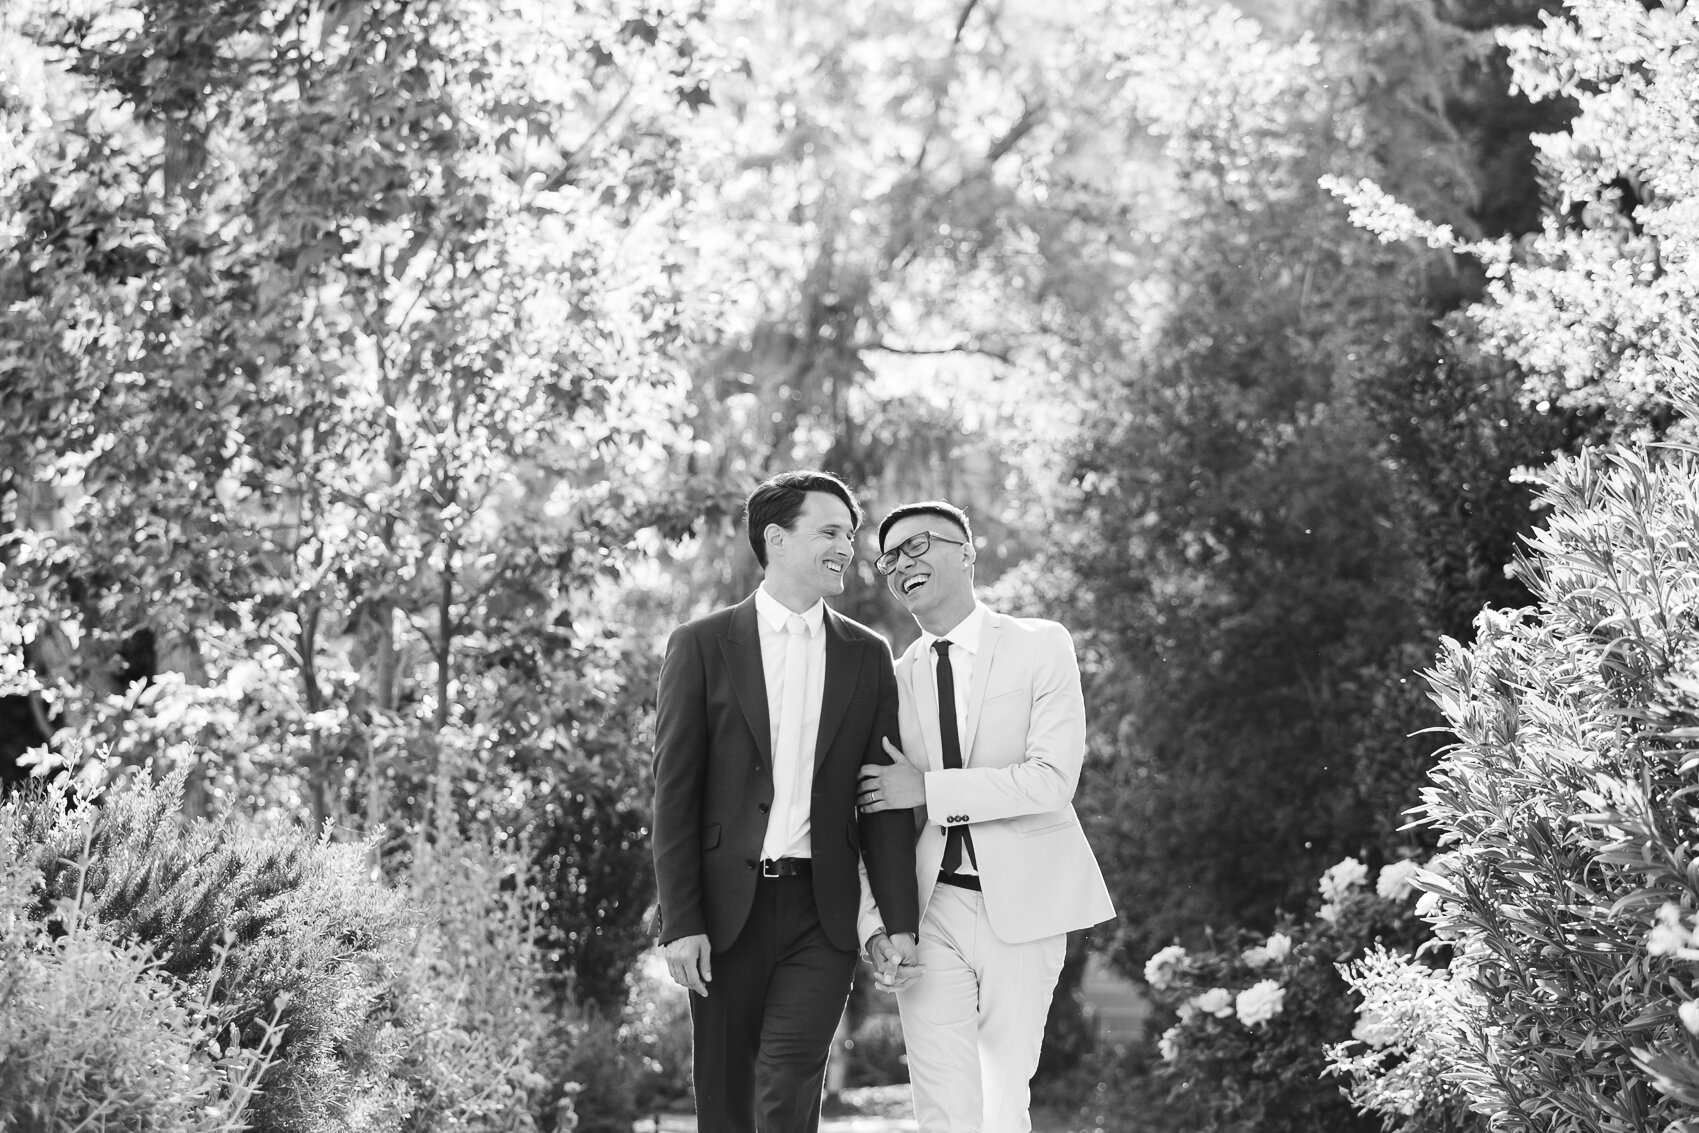 Rainbow_Wedding_Editorial_Photographer_Same_Sex_Couple_Gay_Marriage_Jewel_Tone_California_Malibu_Photography-0928.jpg